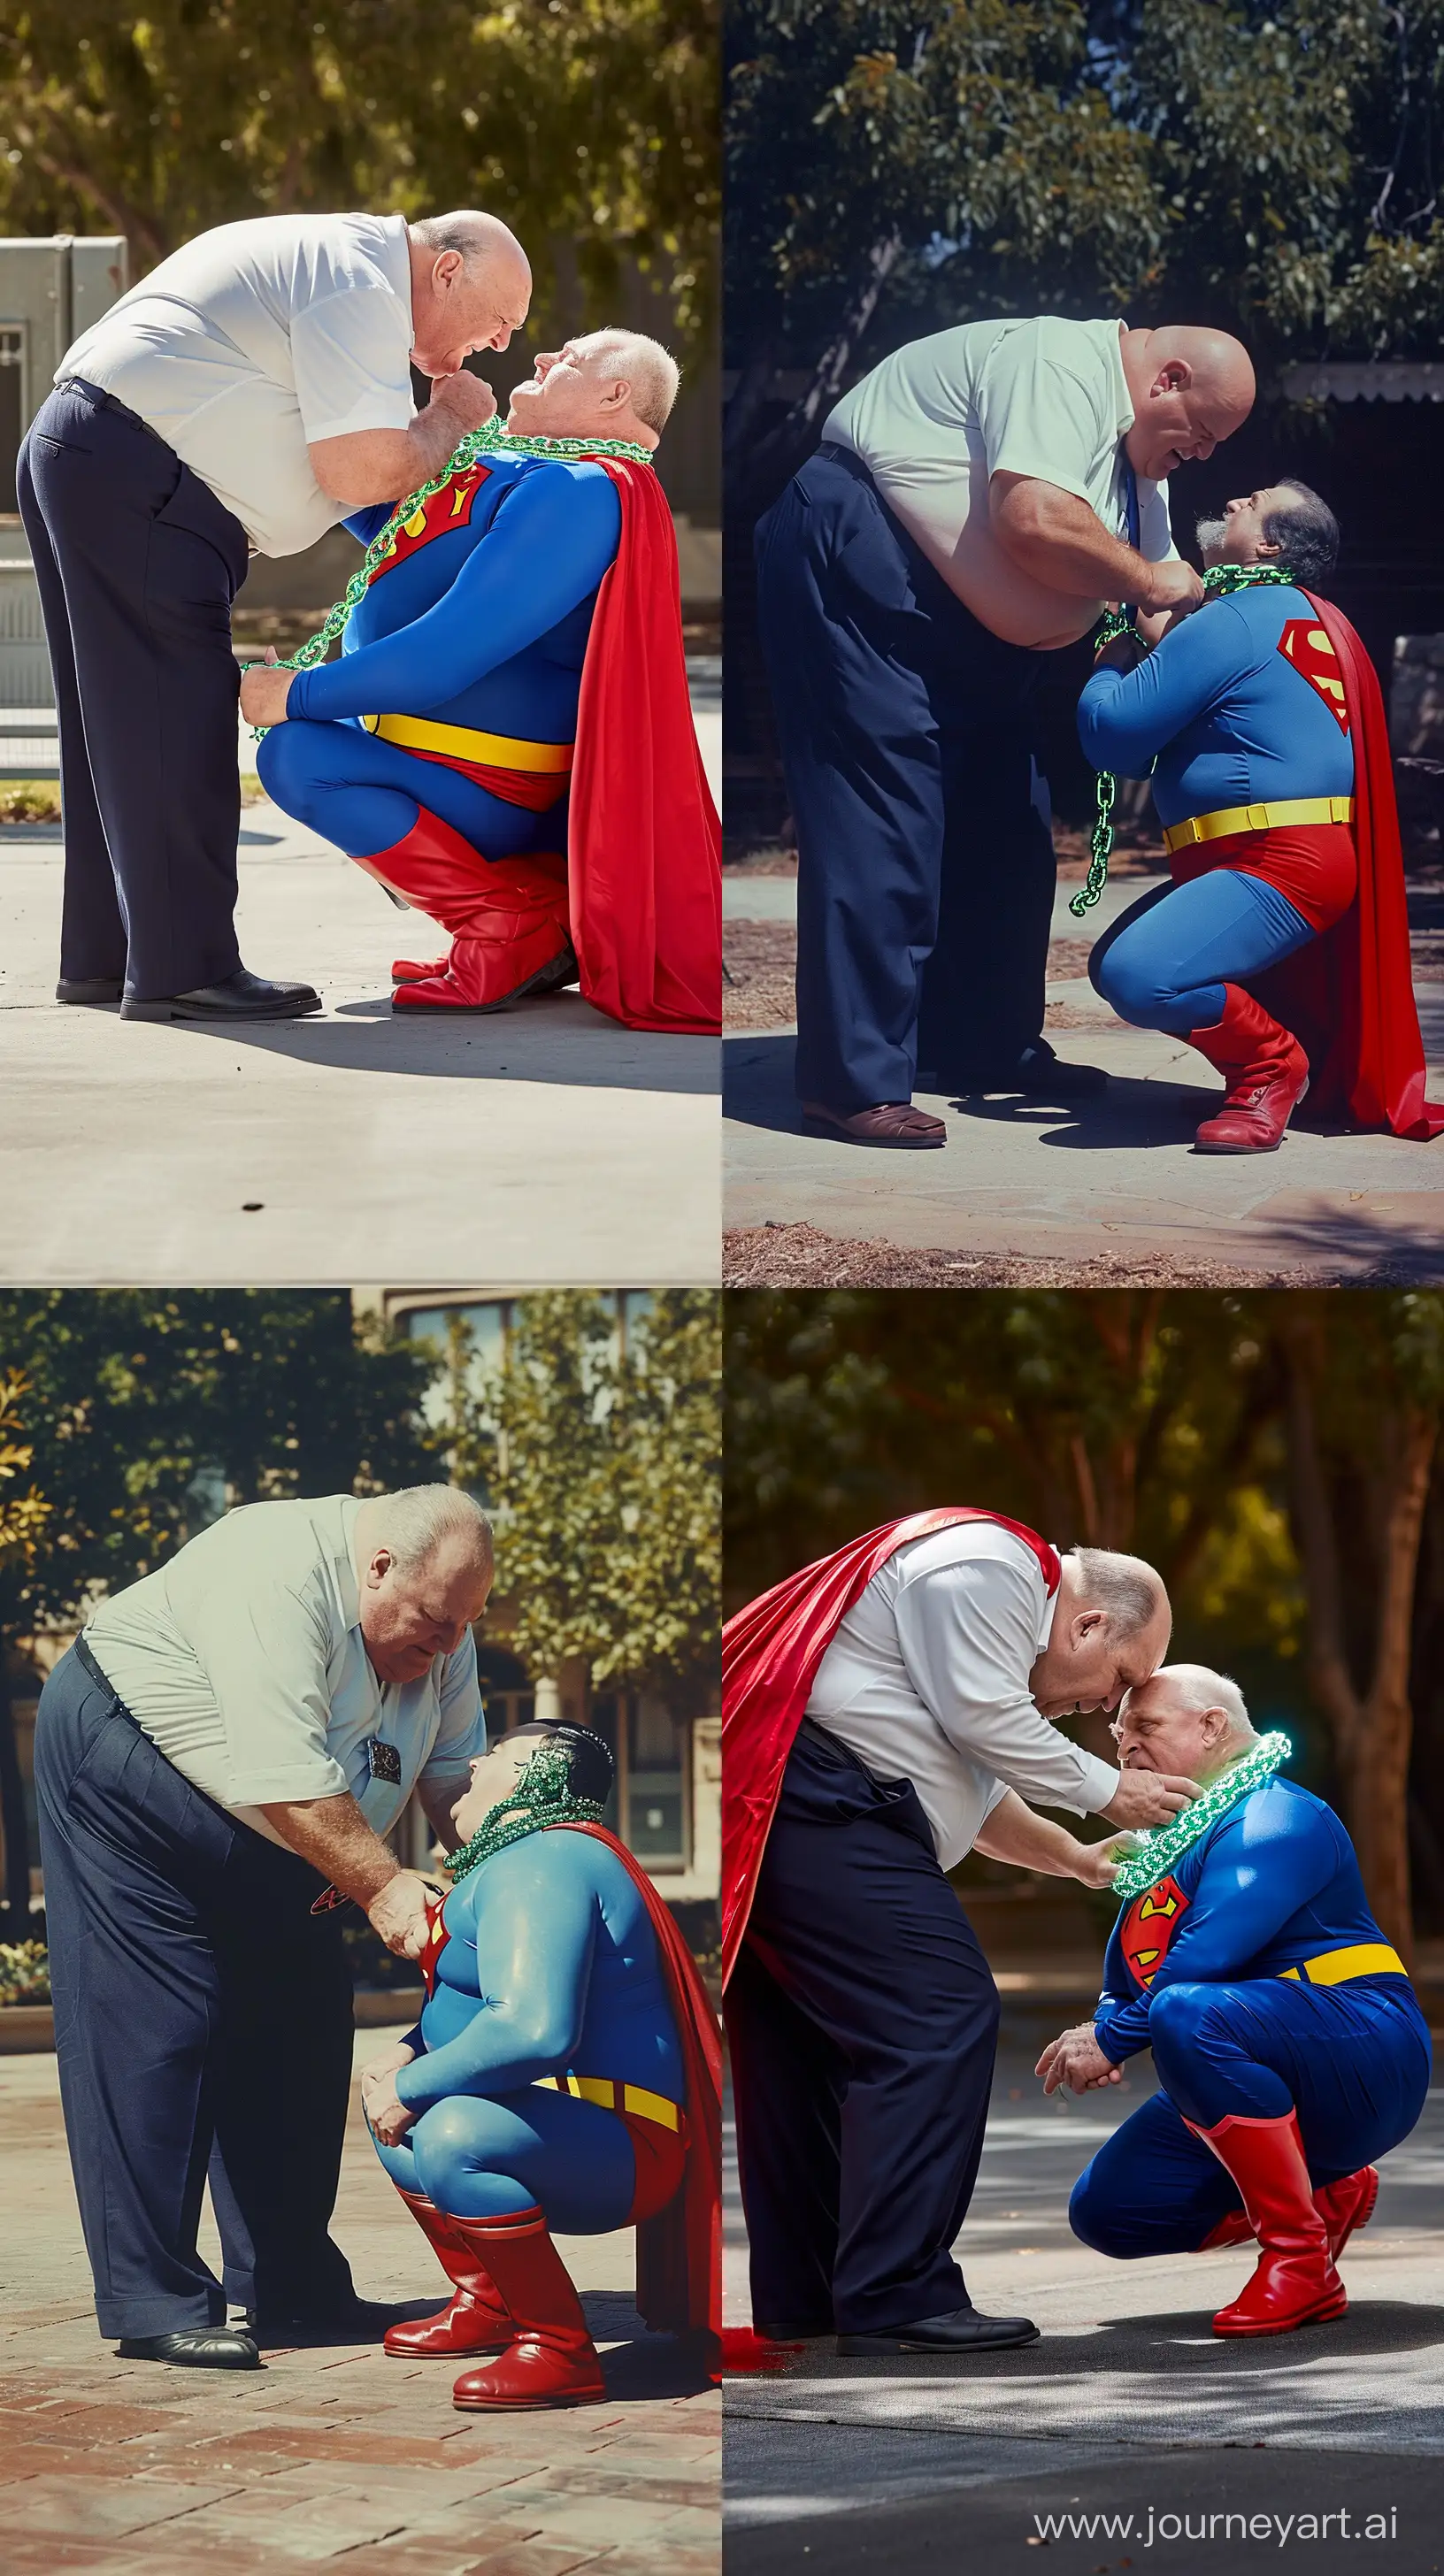 Elderly-Businessman-Tightening-Glowing-Green-Chain-Collar-on-Kneeling-Superman